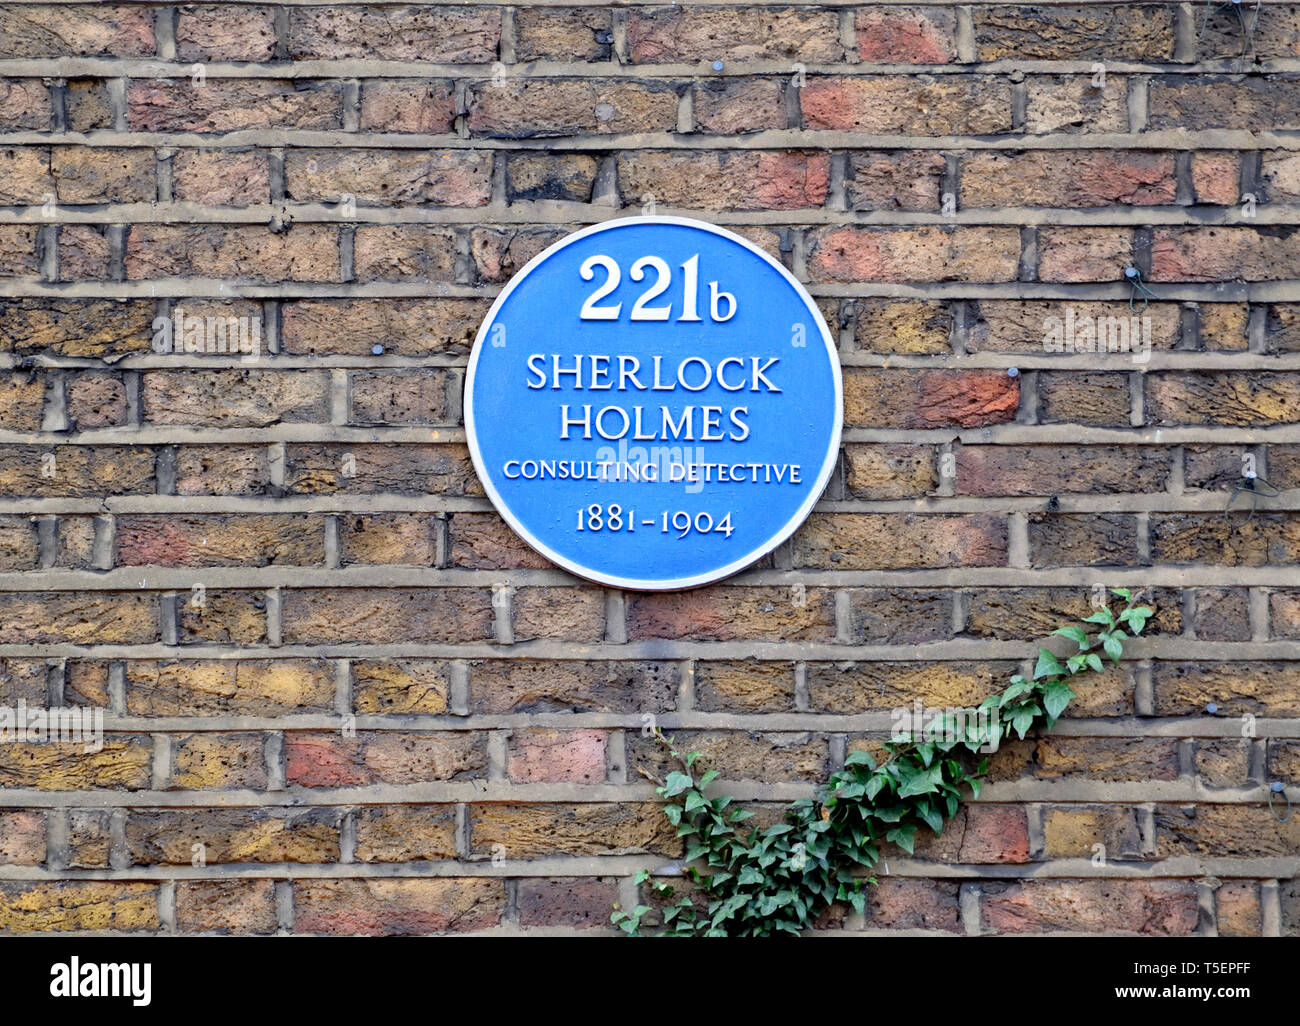 London, England, UK. Commemorative Blue Plaque: 221b Sherlock Holmes consulting detective 1881-1904 (fictional character) 221b Baker Street Stock Photo